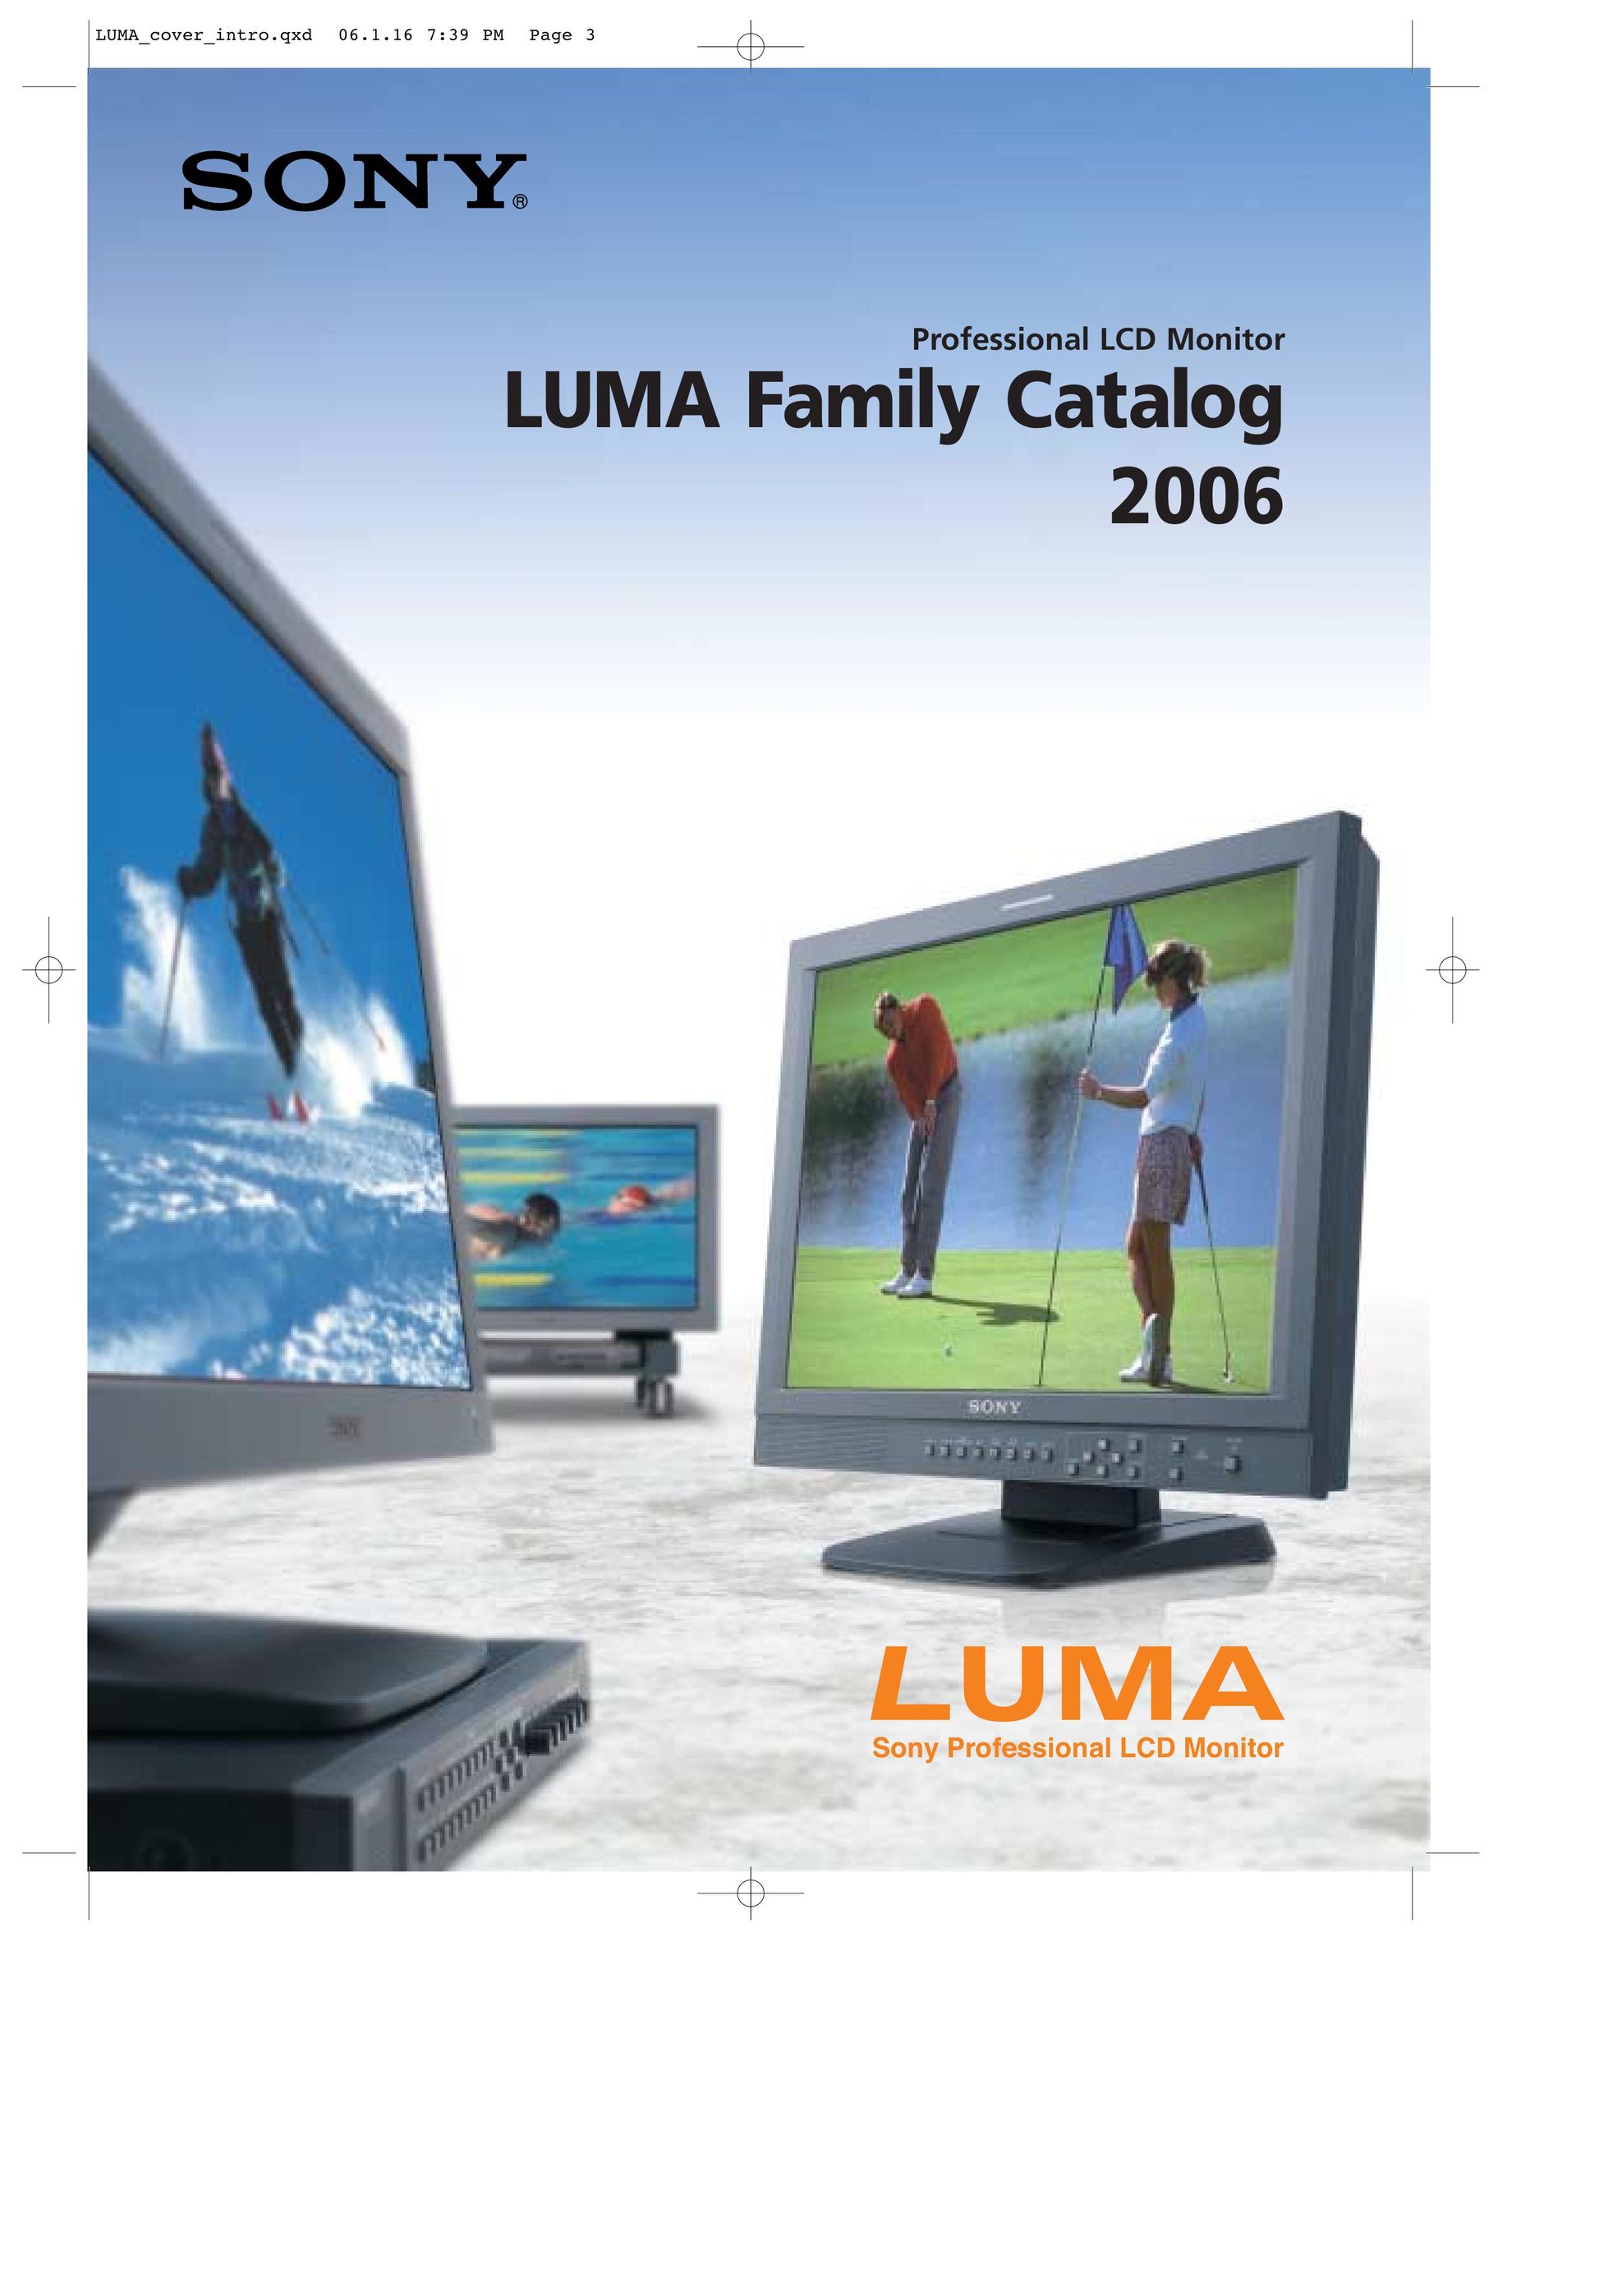 Ergotron LUMA Computer Monitor User Manual